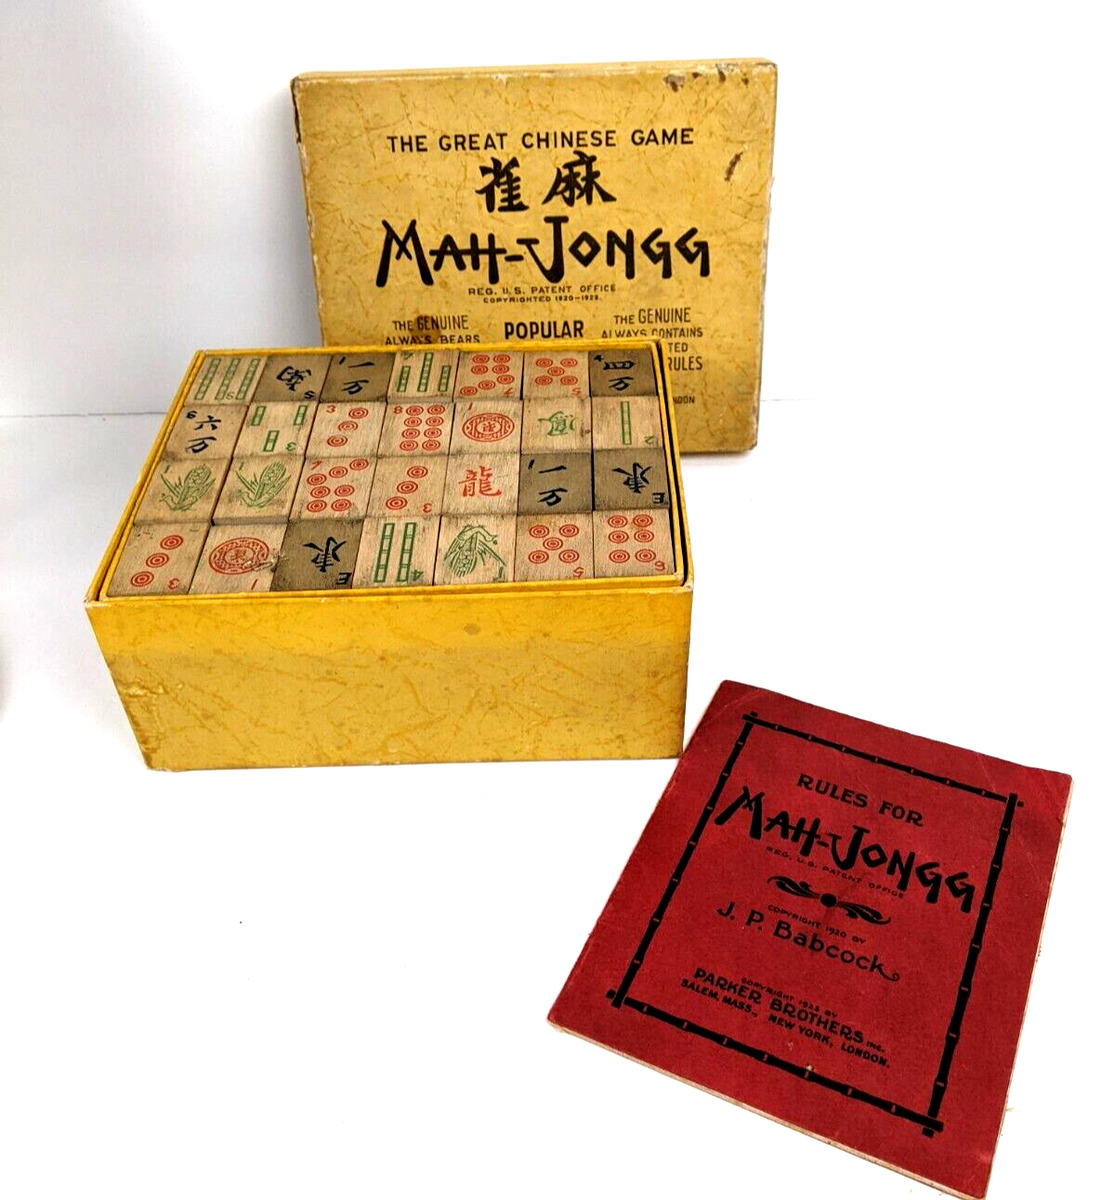 1923 VINTAGE MAH JONGG SET by PARKER BROTHERS GAME 144 TILES & INSTRUCTIONS  | eBay